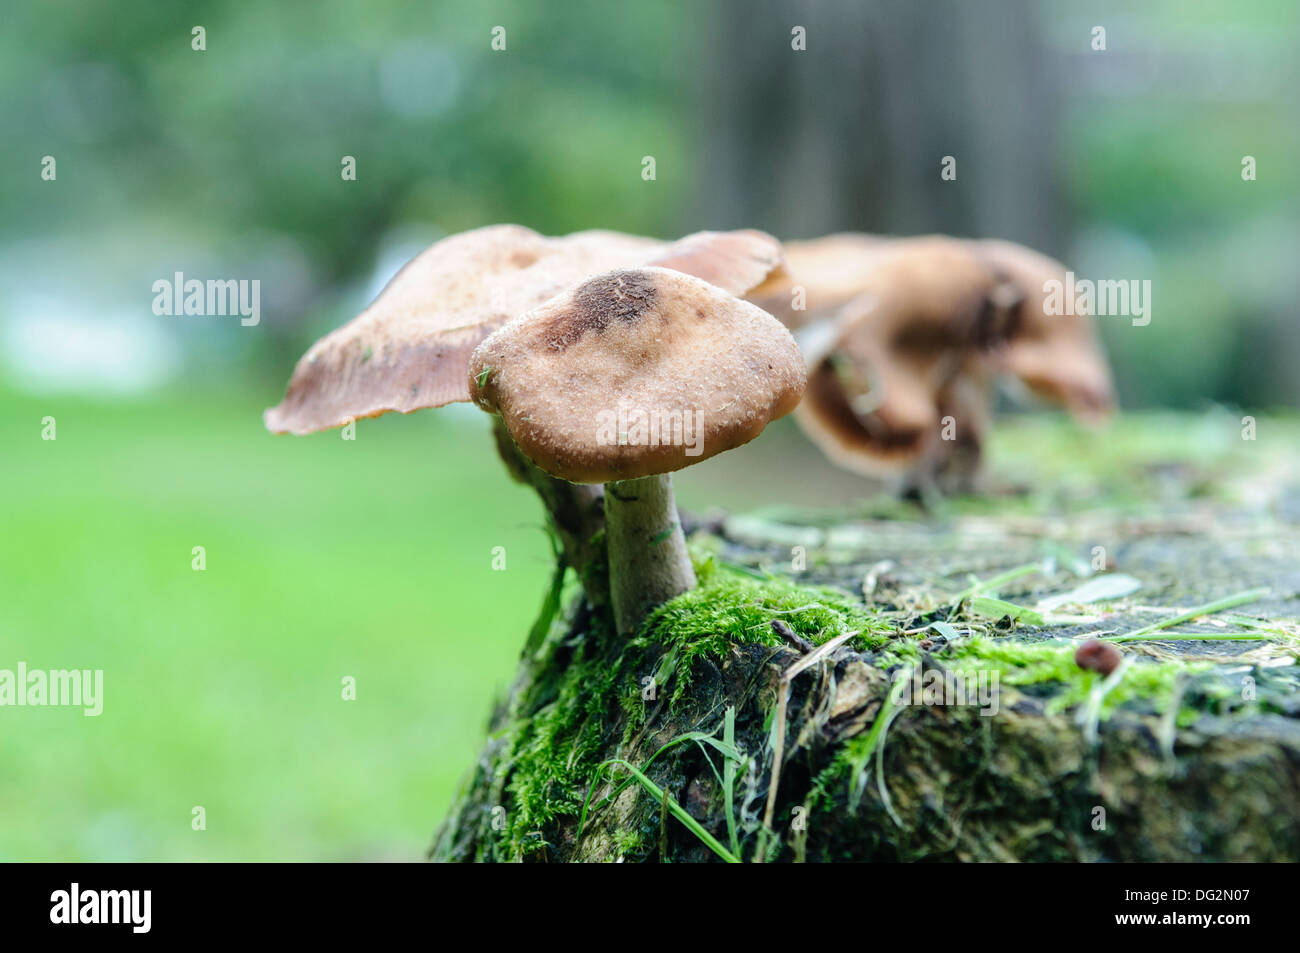 Deer Shield mushroom growing on a tree stump Stock Photo